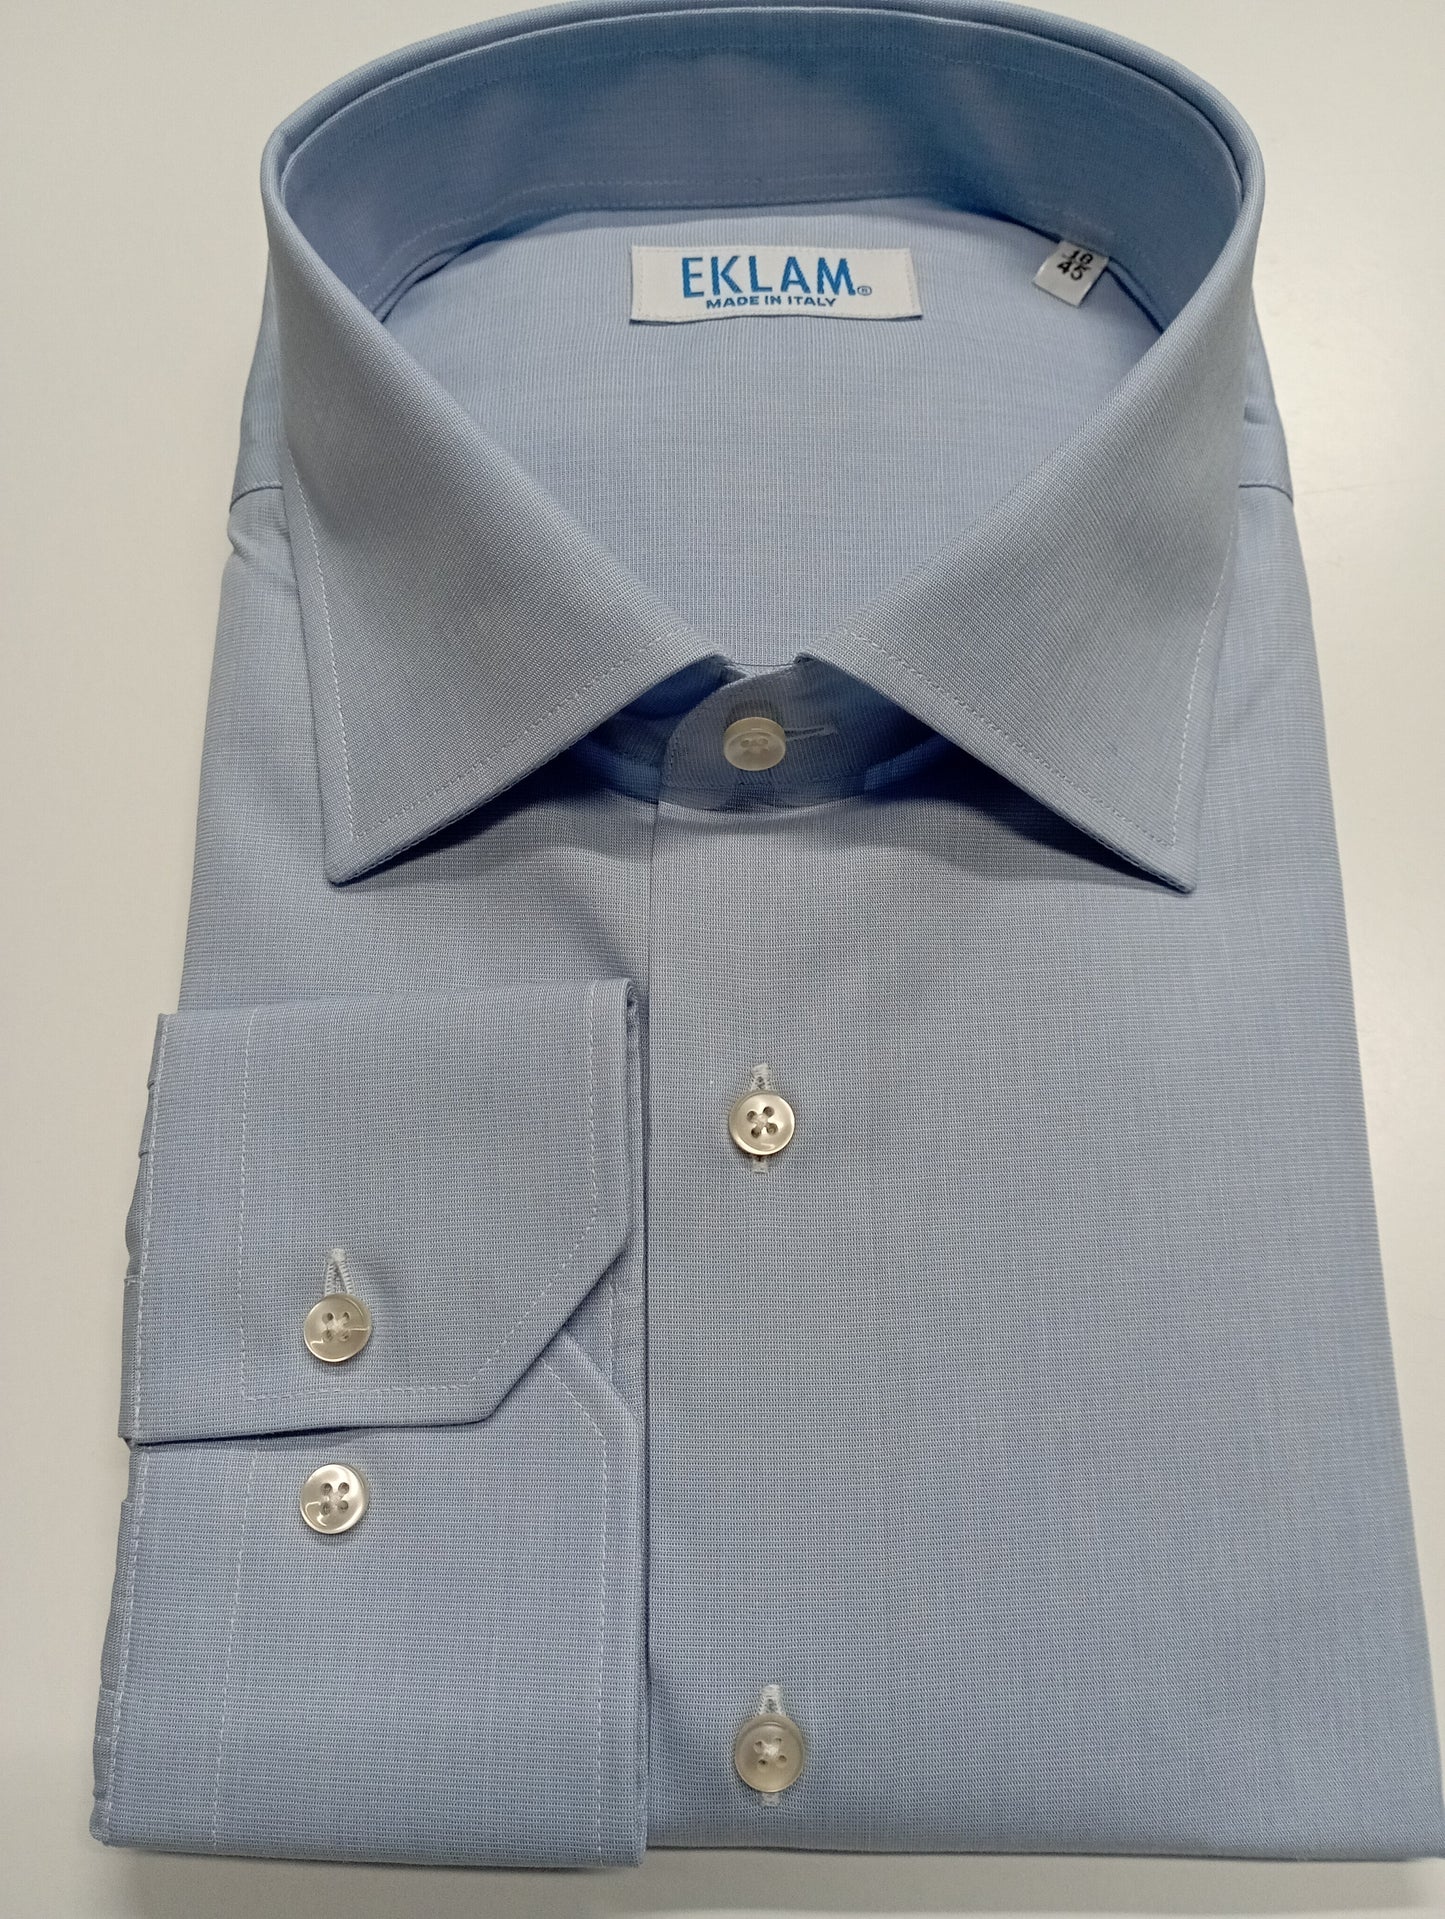 Men's shirt with light blue spread collar